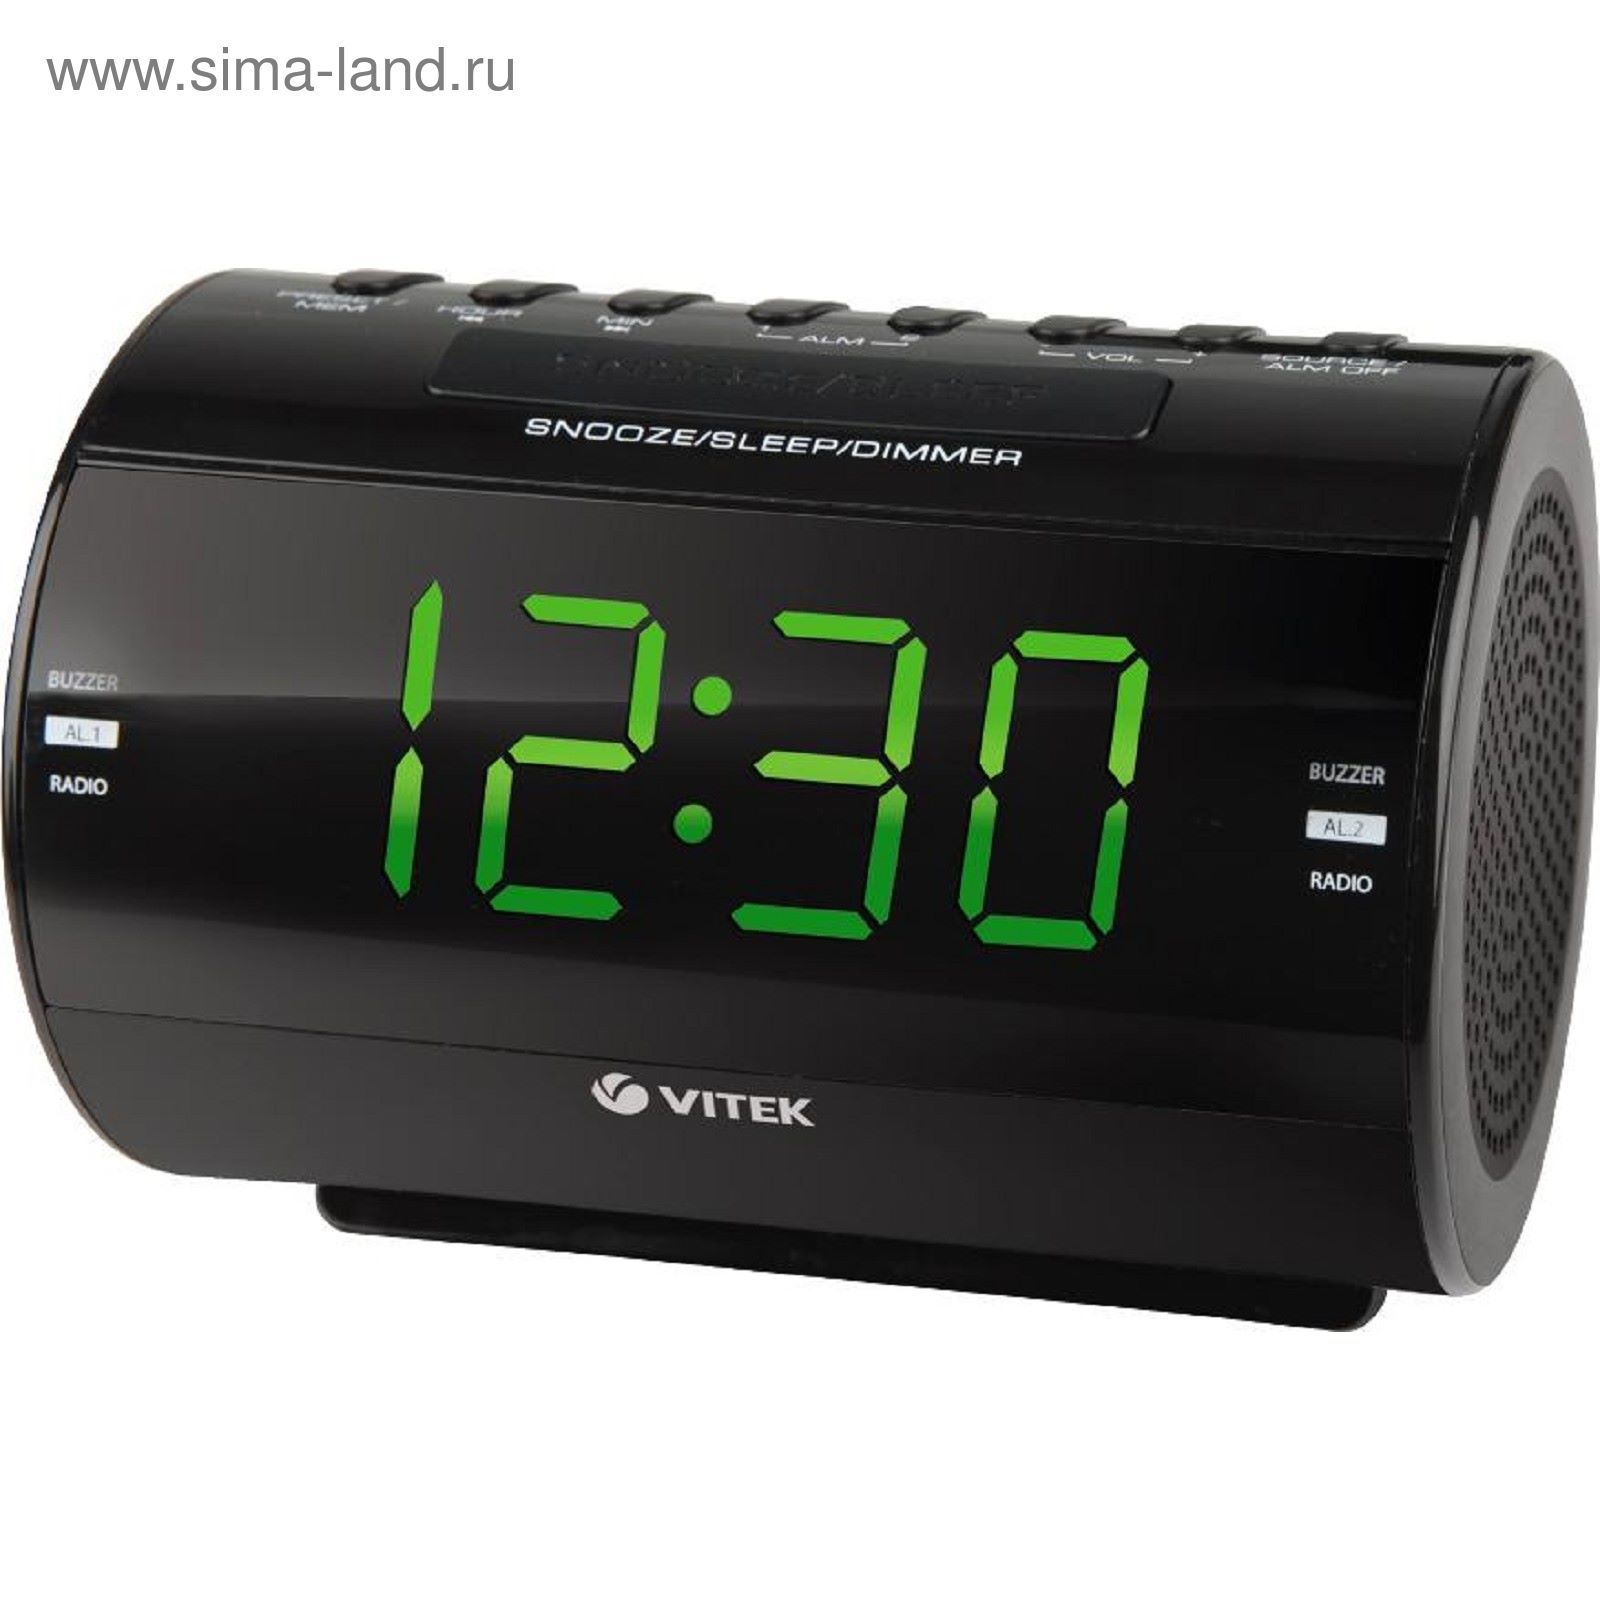 Радиочасы Vitek VT-6604 черный